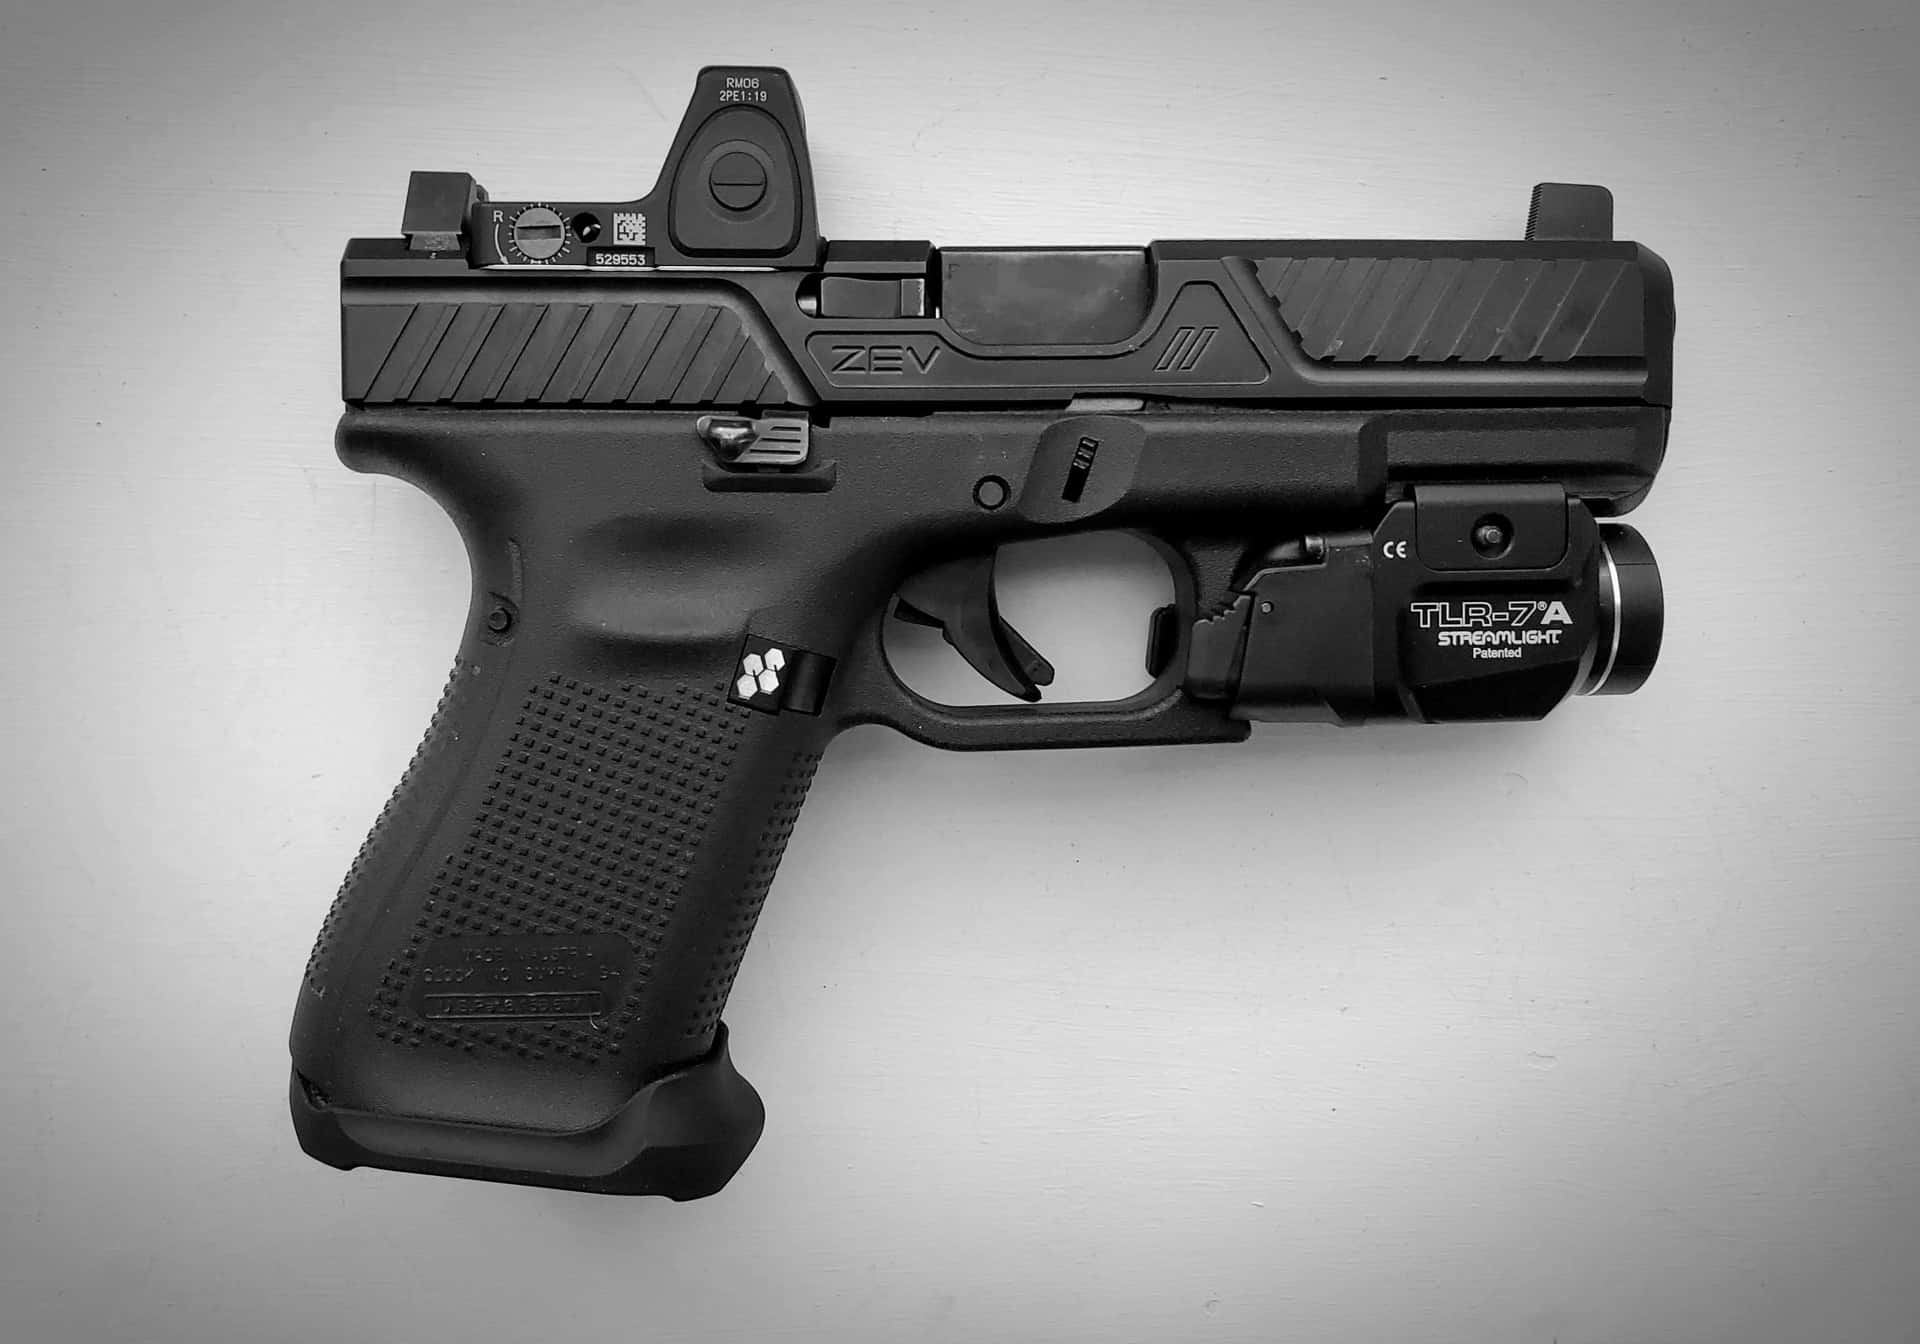 Glock 19 concealed carry handgun